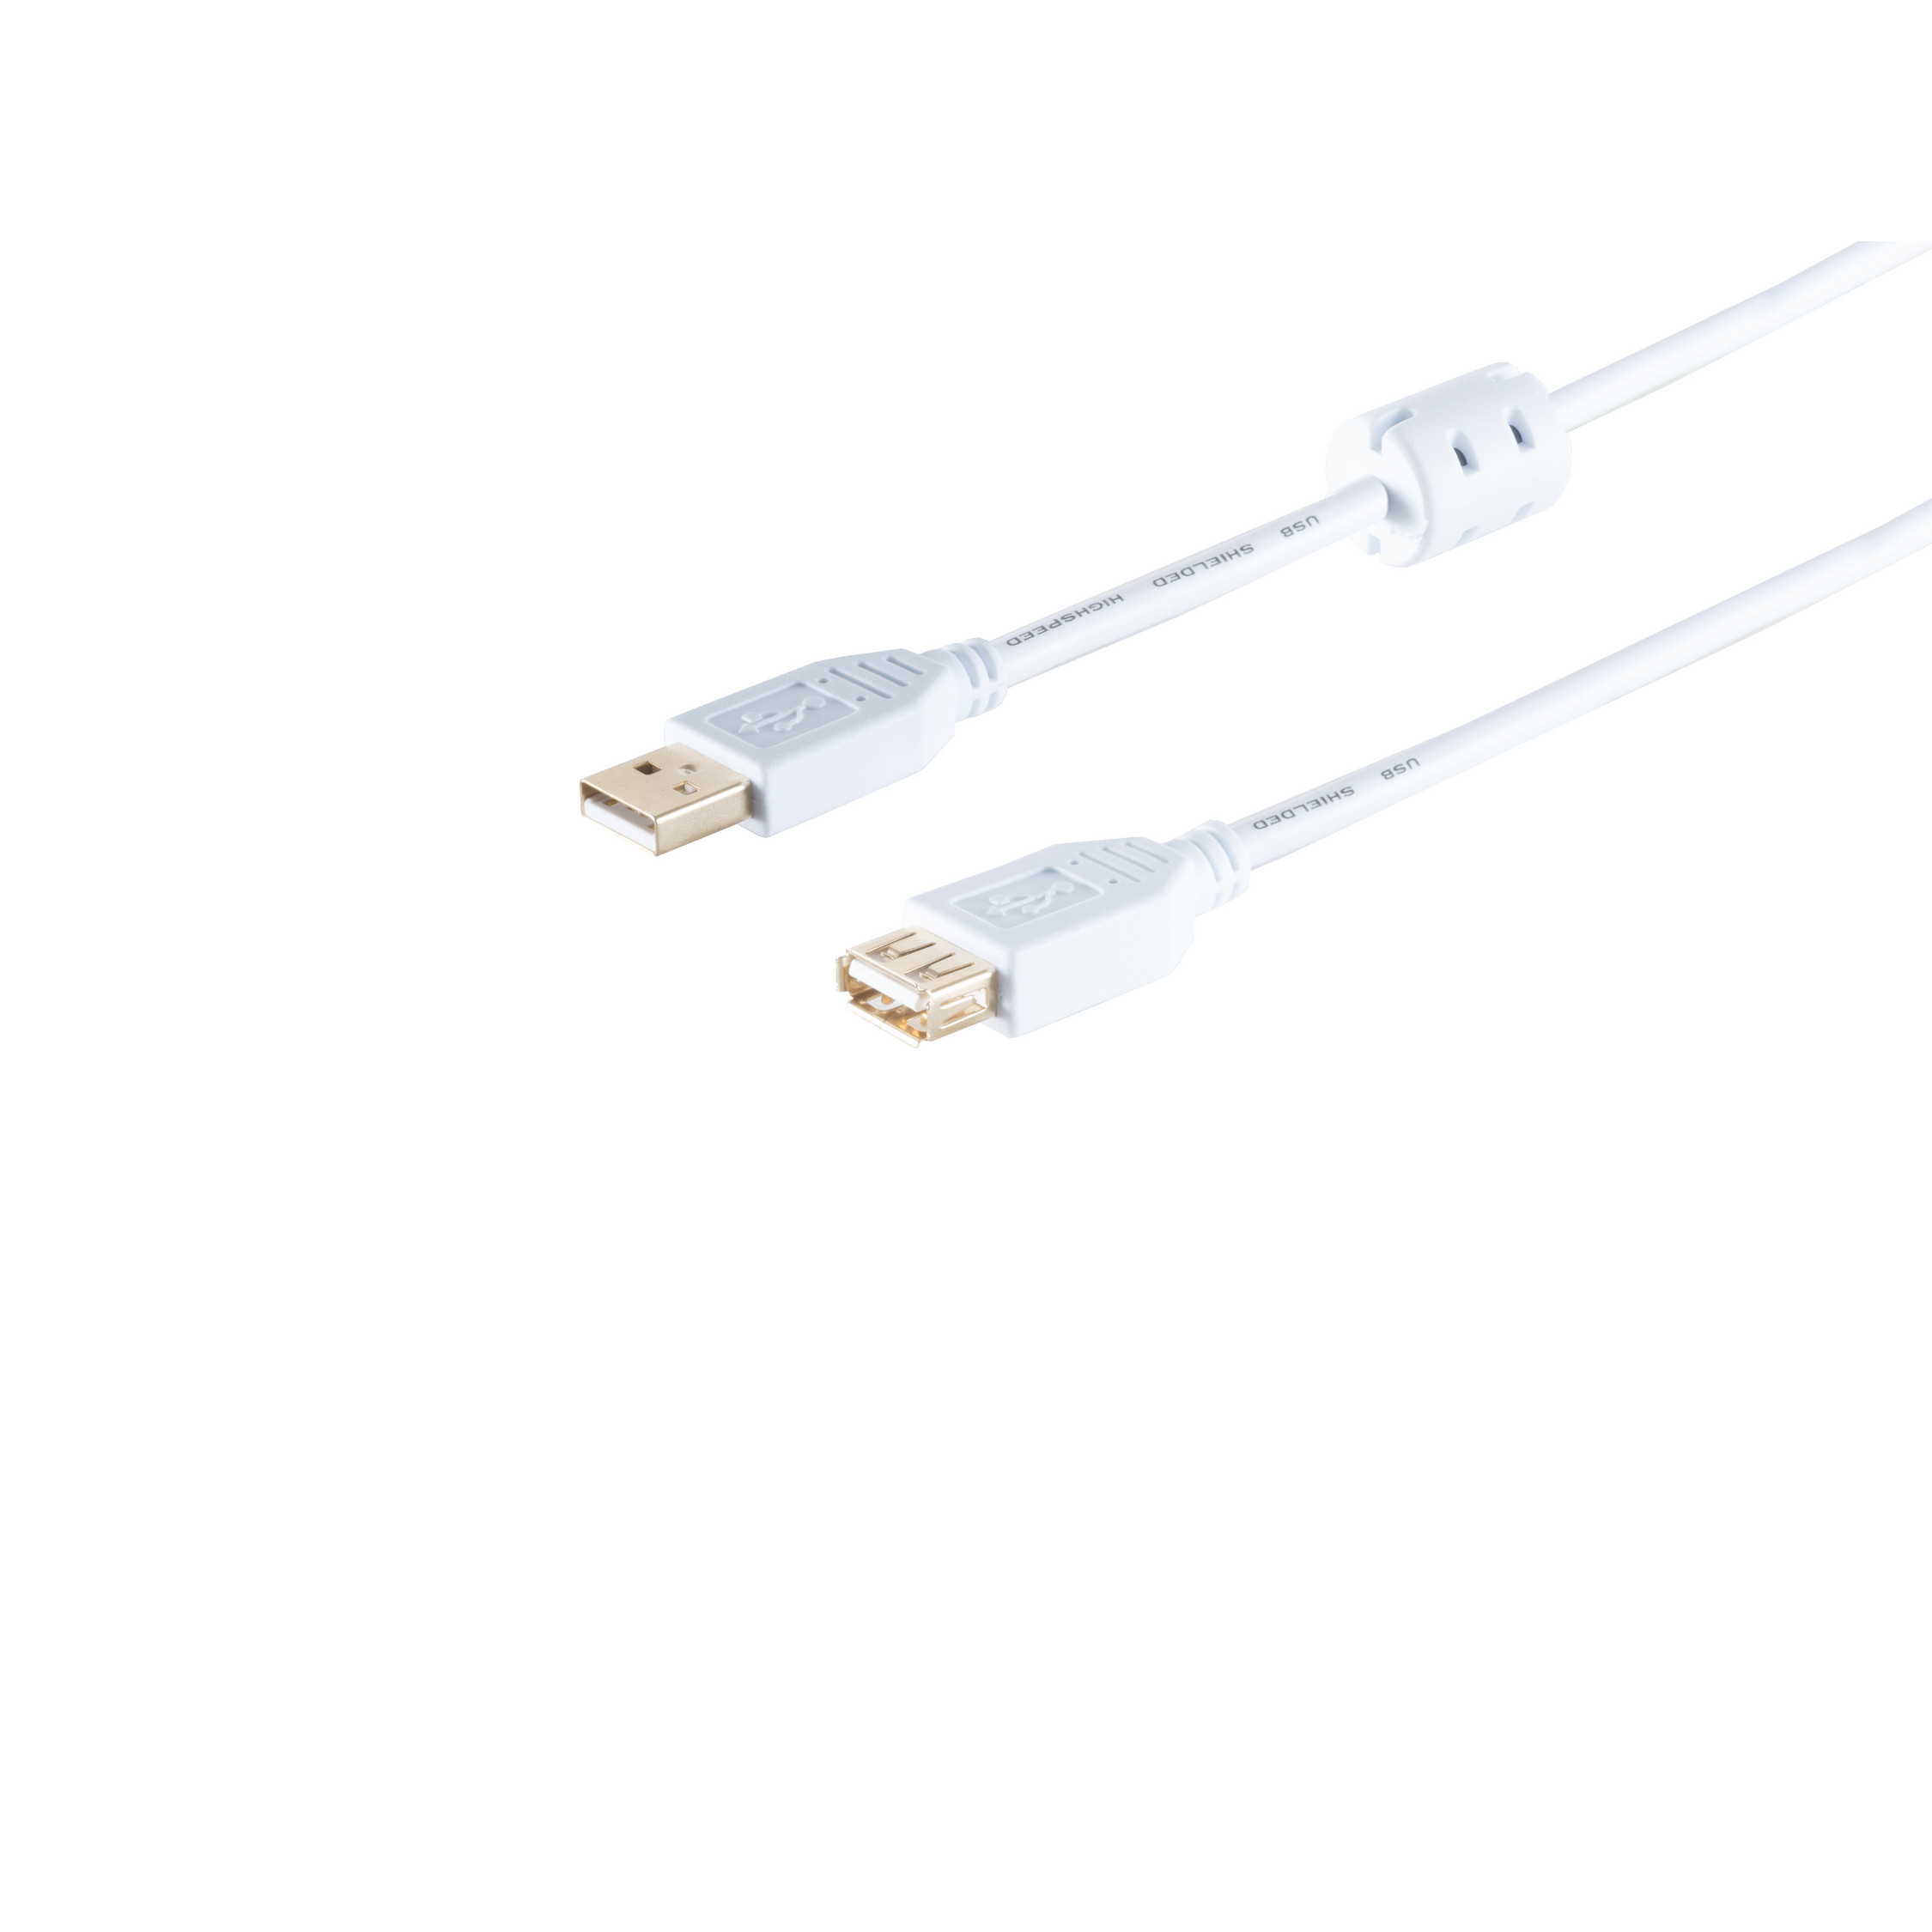 S/CONN MAXIMUM USB A/A Ferrit, Speed High 2.0 Buchse weiß, USB CONNECTIVITY 1m mit Verlängerung, Kabel